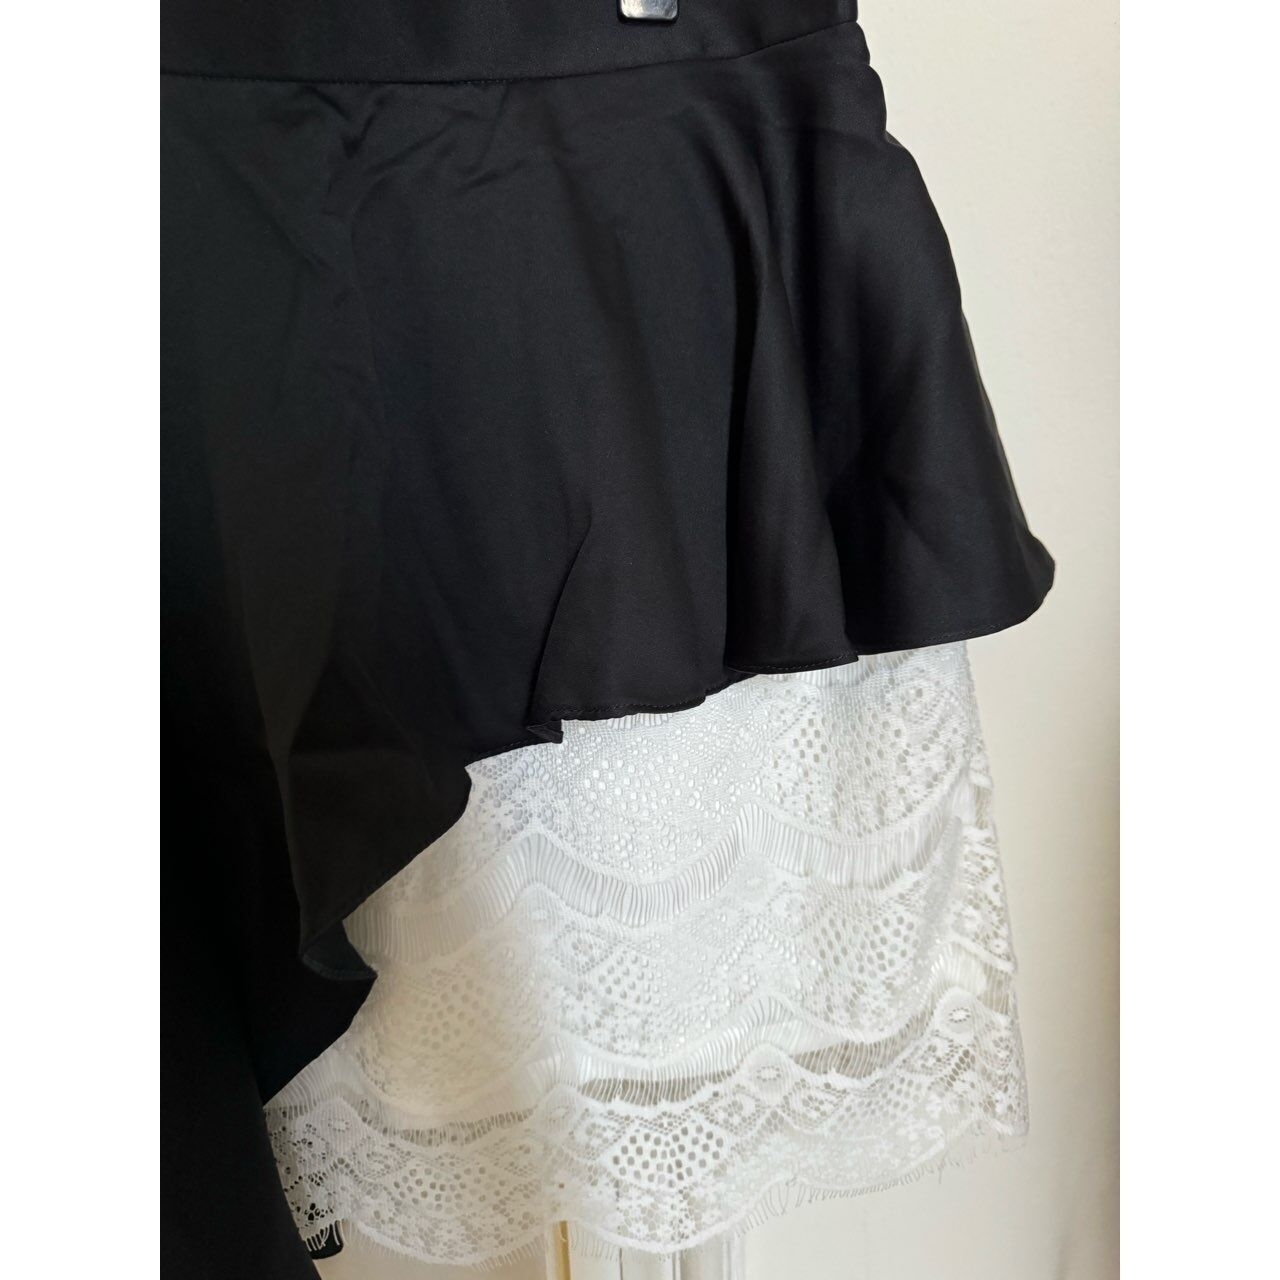 Jolie Black & White Mini Skirt